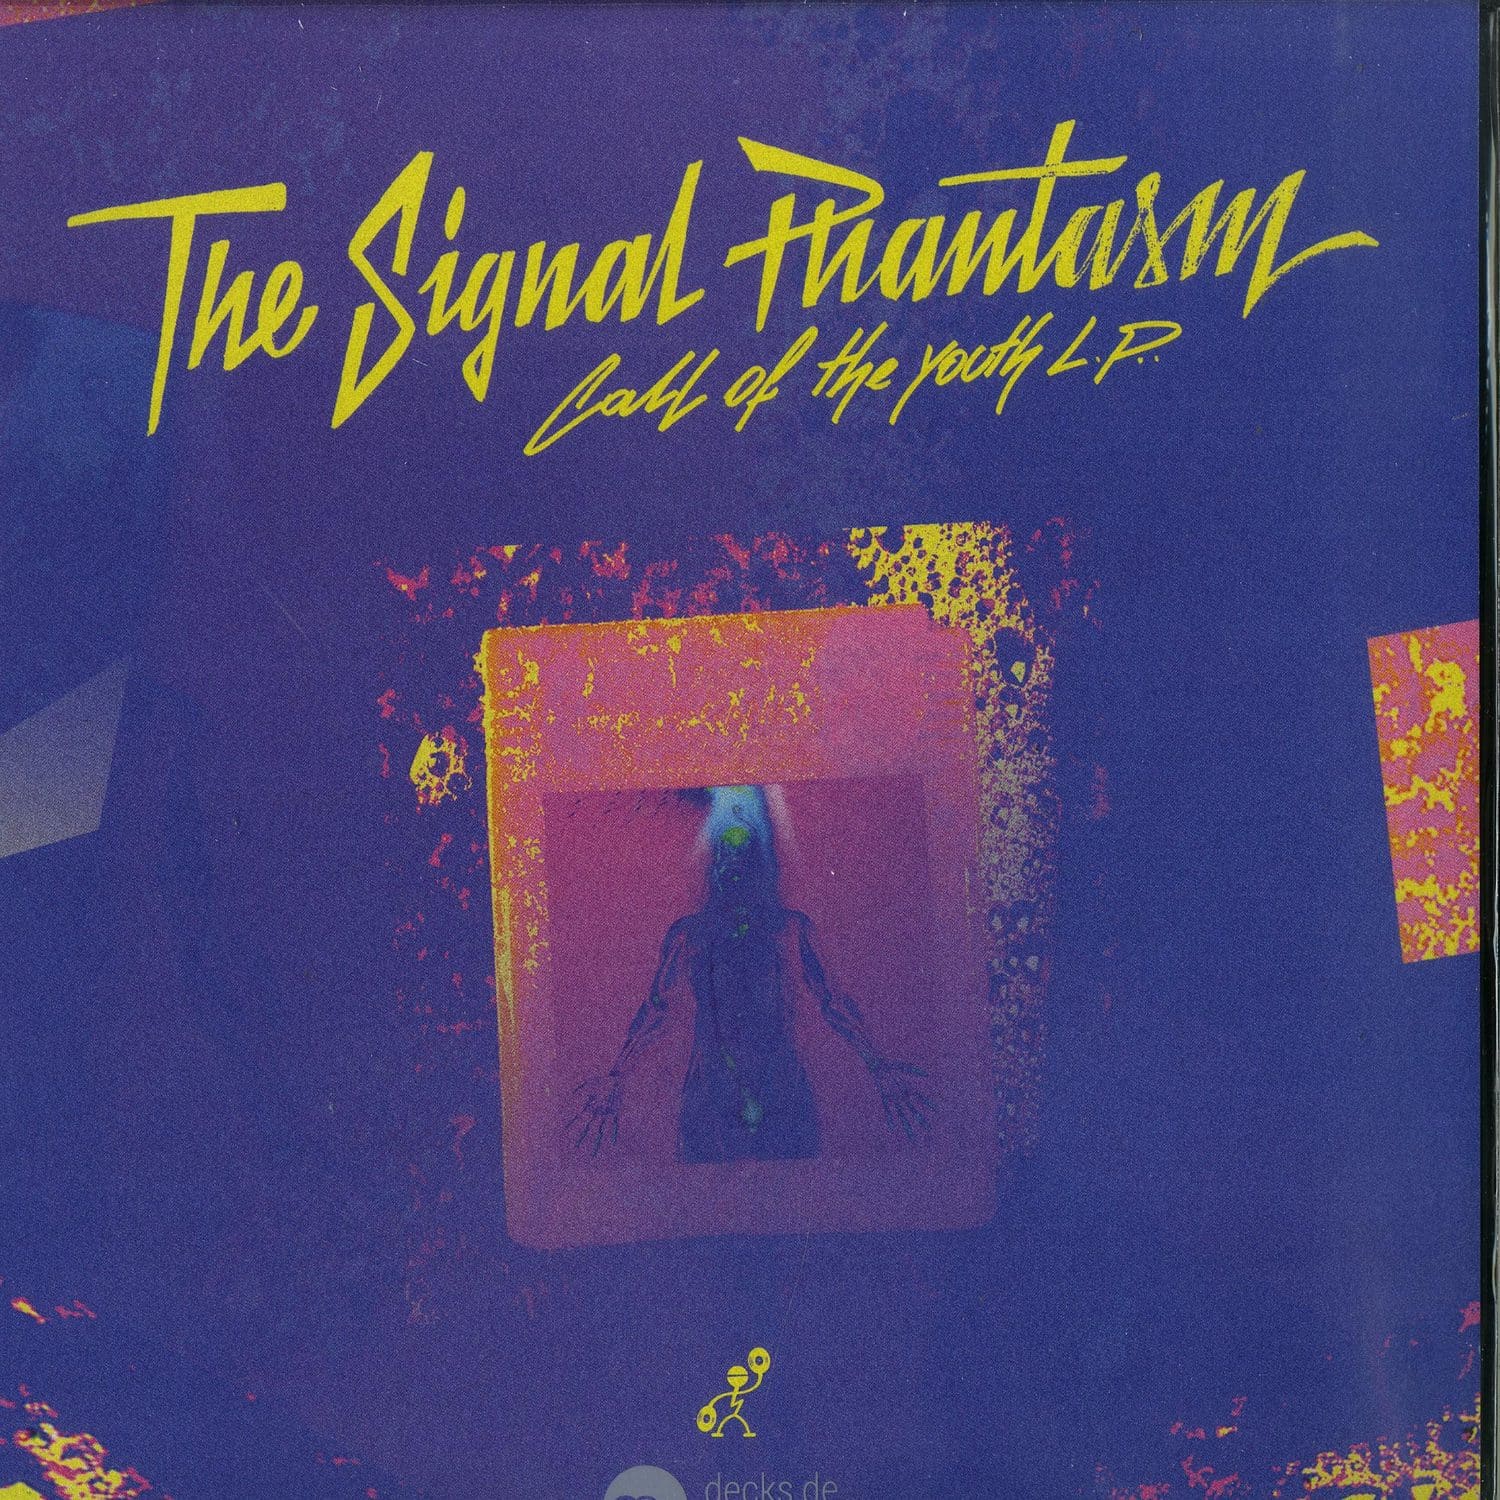 The Signal Phantasm - CALL OF THE YOUTH 